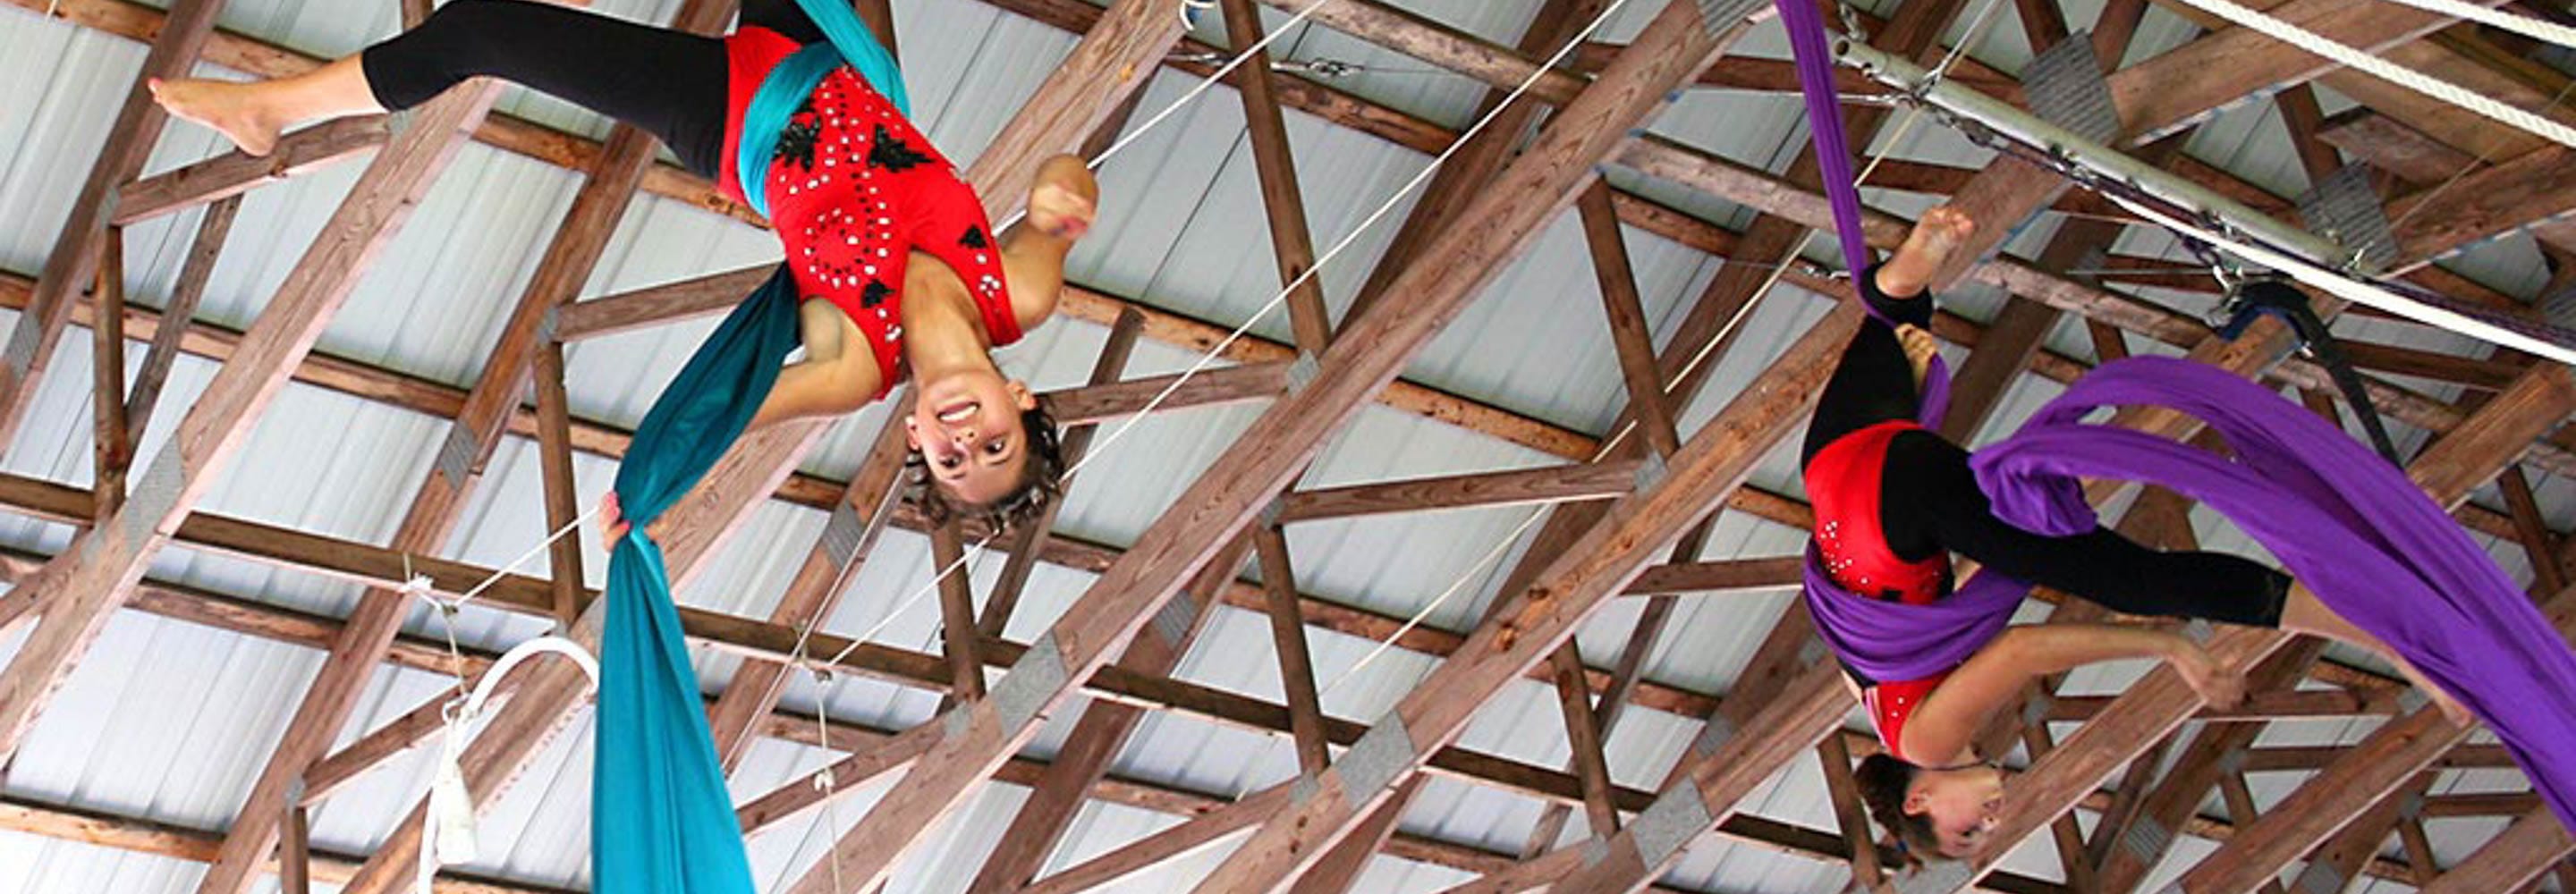 girls doing aerial acrobatics